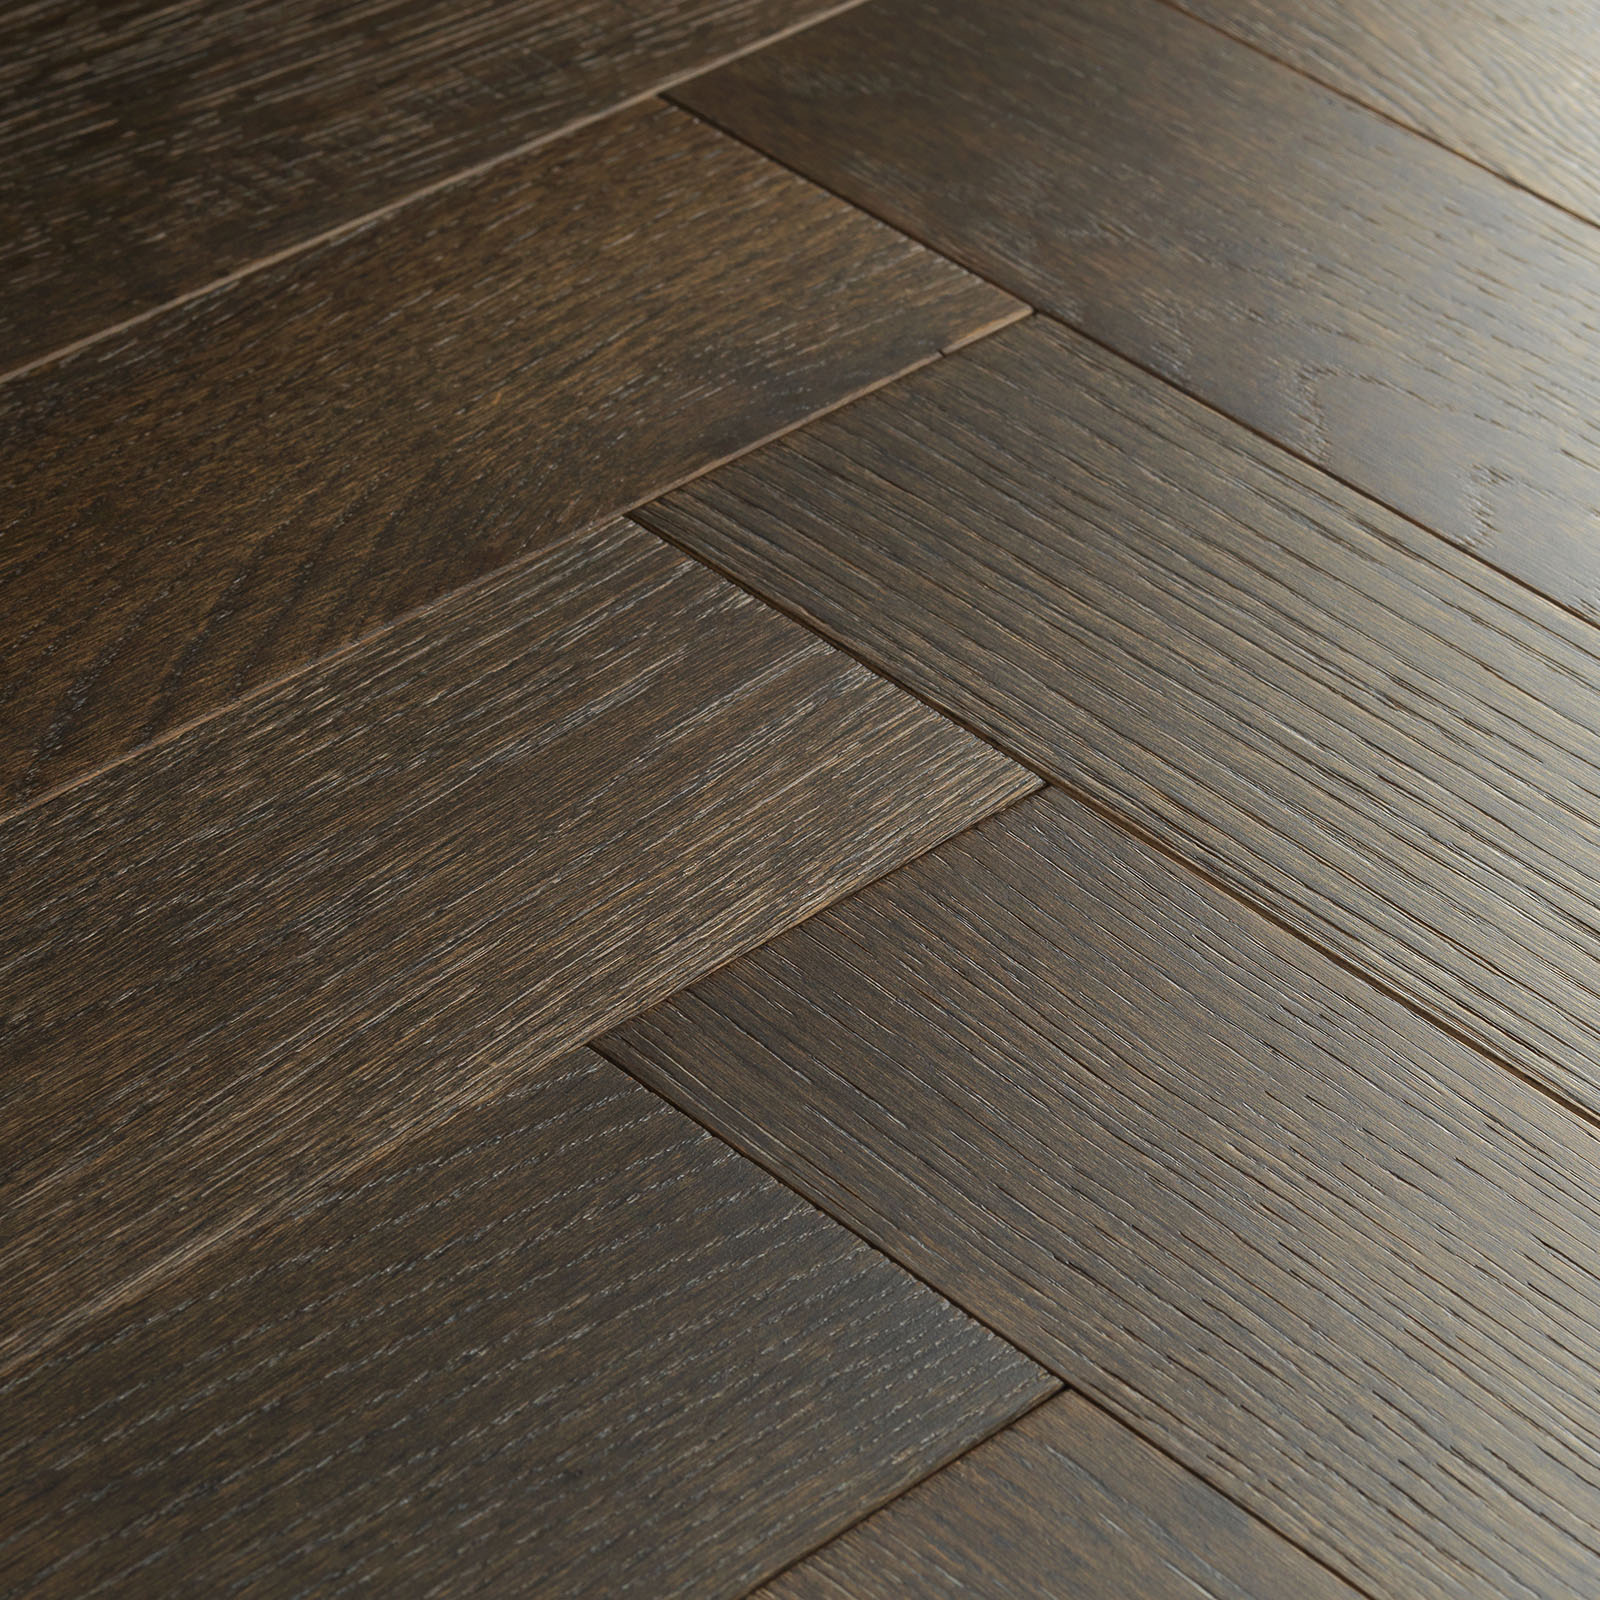 Goodrich Espresso Oak Engineered, Espresso Hardwood Floors